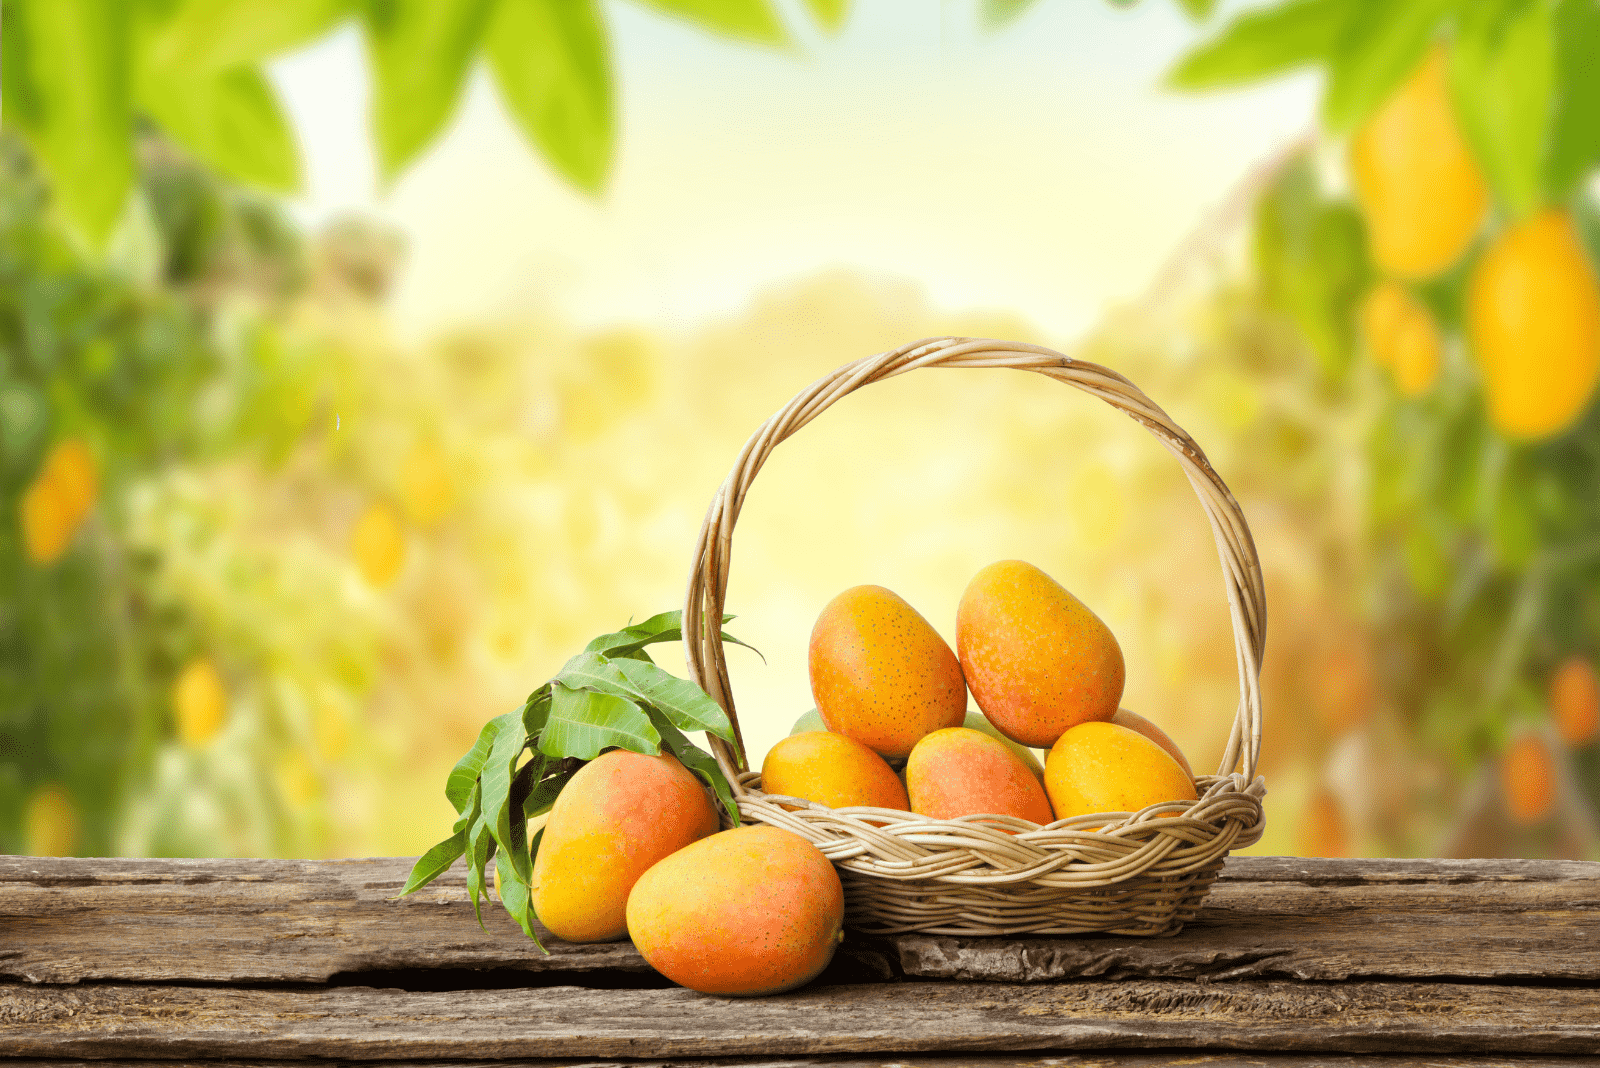 Van Dyke mangoes in a basket on the table